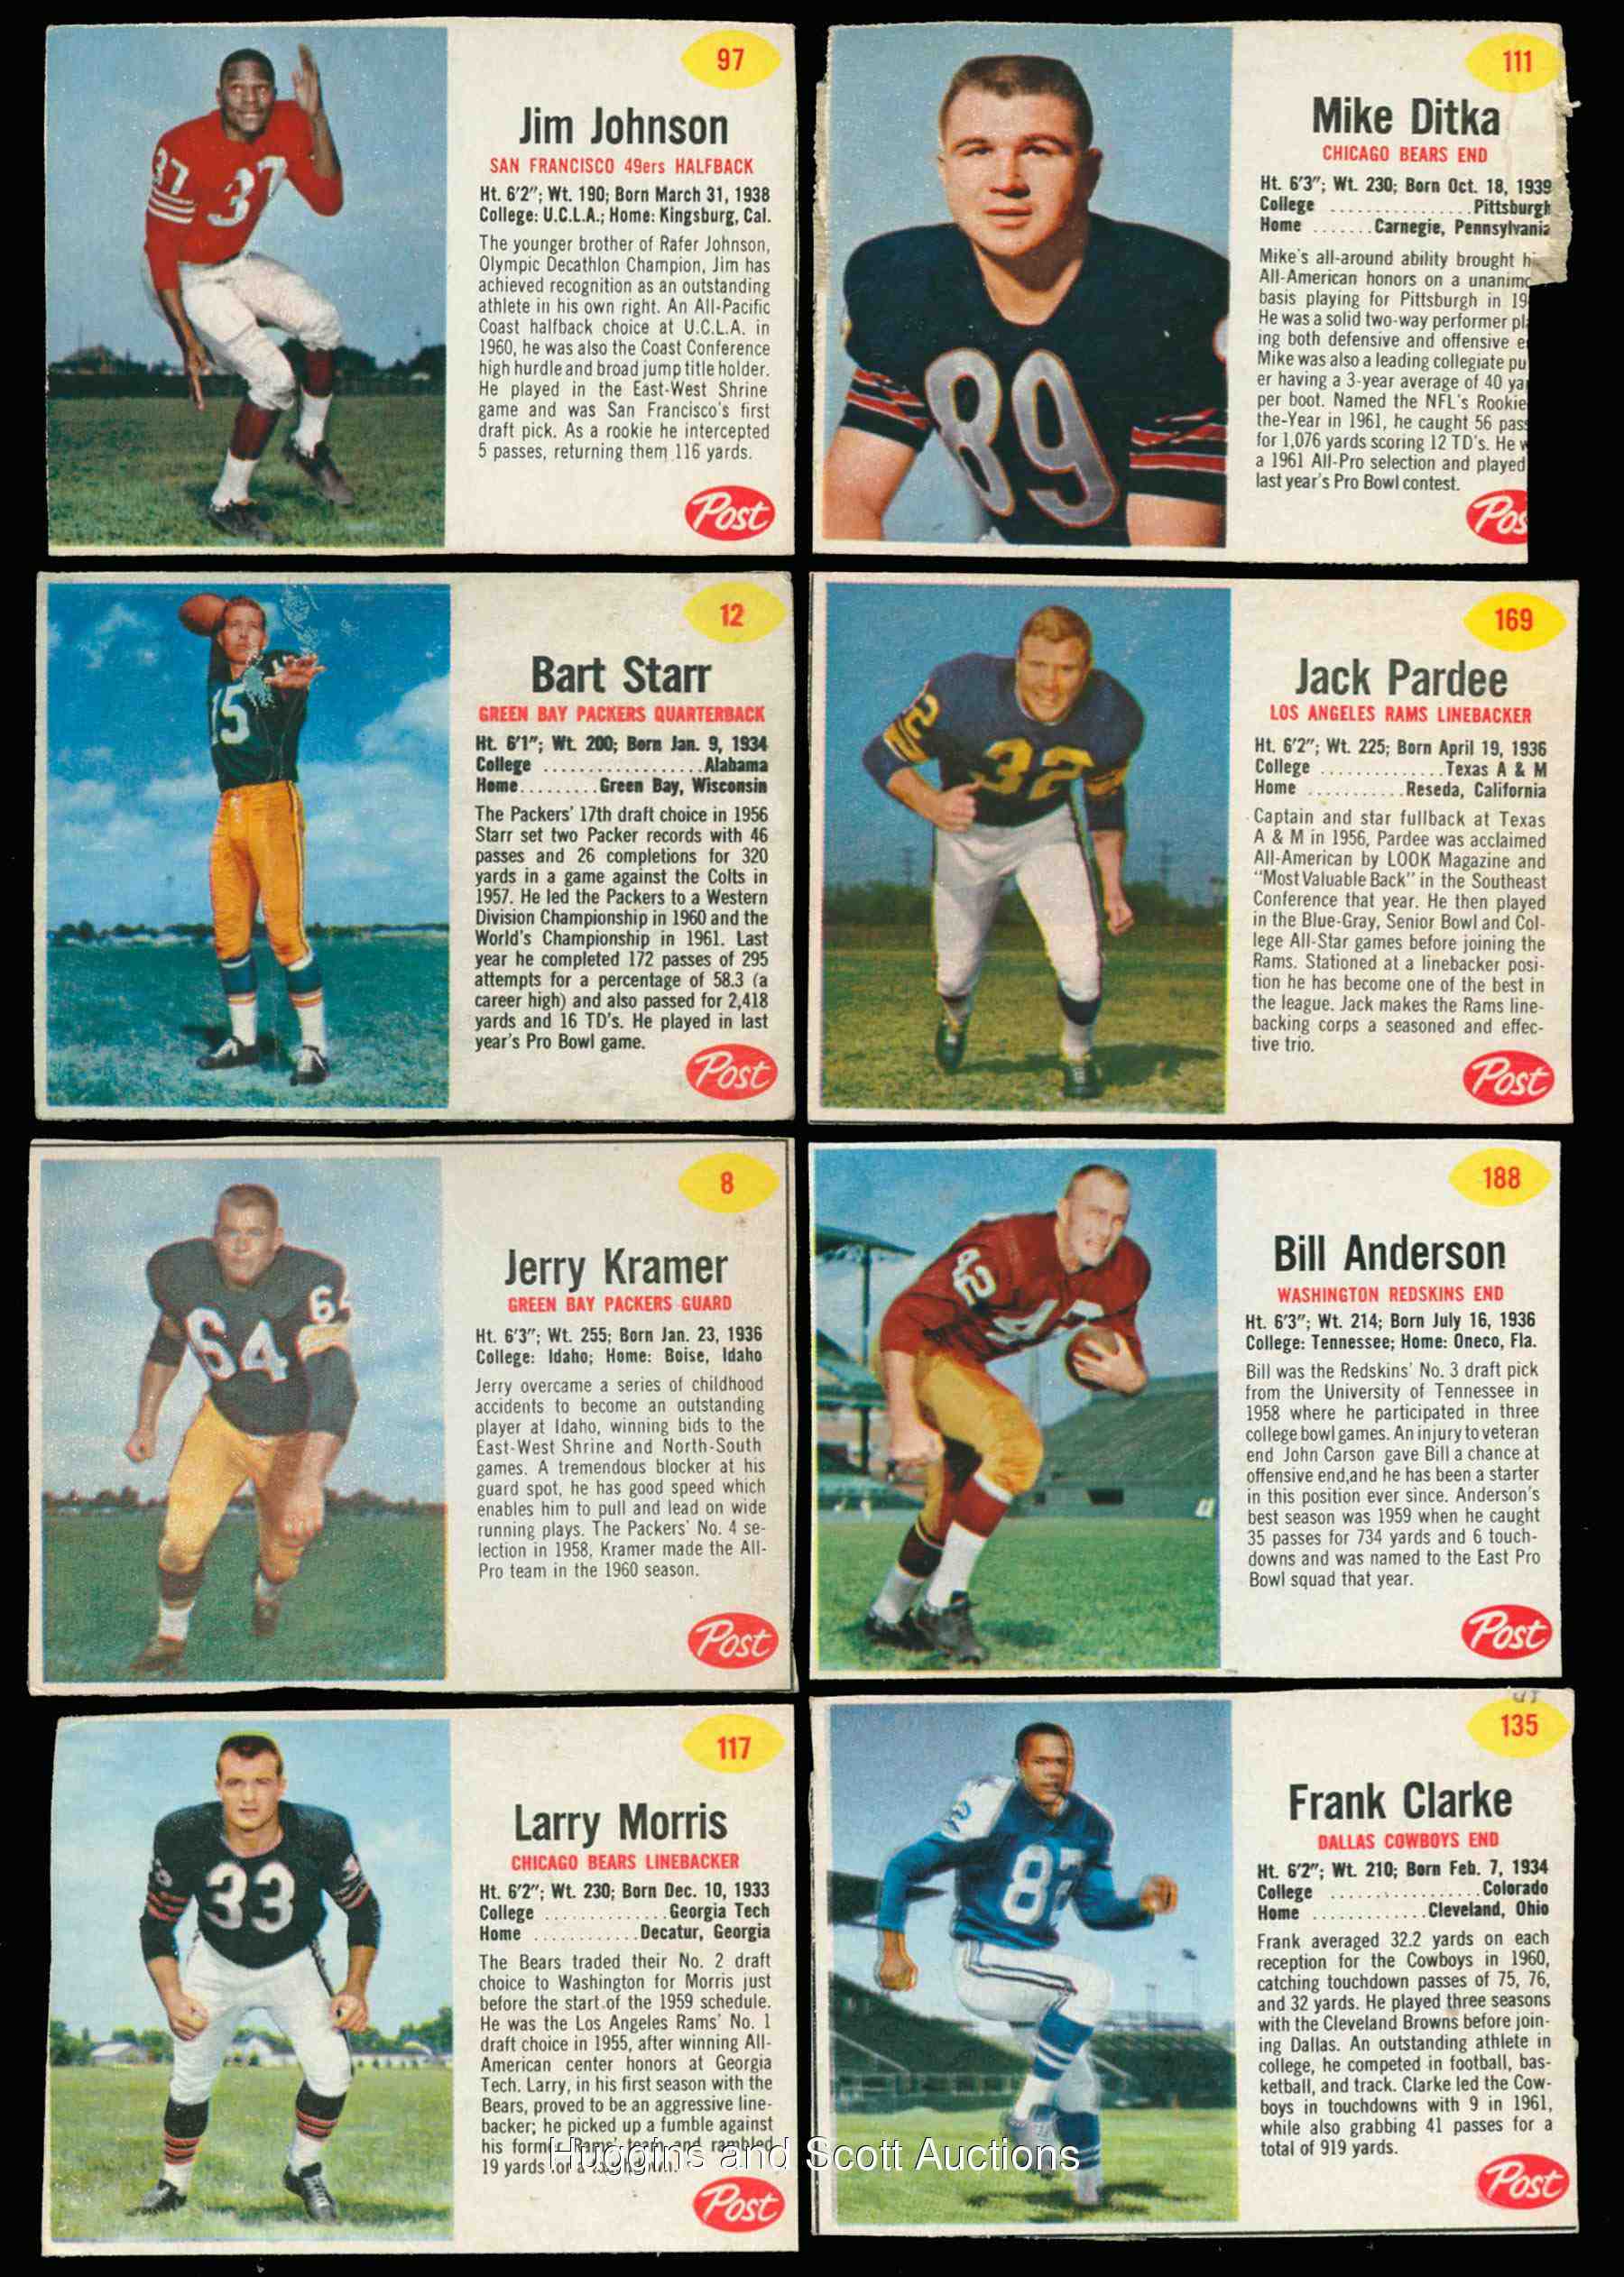 1962 Post Cereal FB #135 Frank Clarke SHORT PRINT (Cowboys) Football cards value